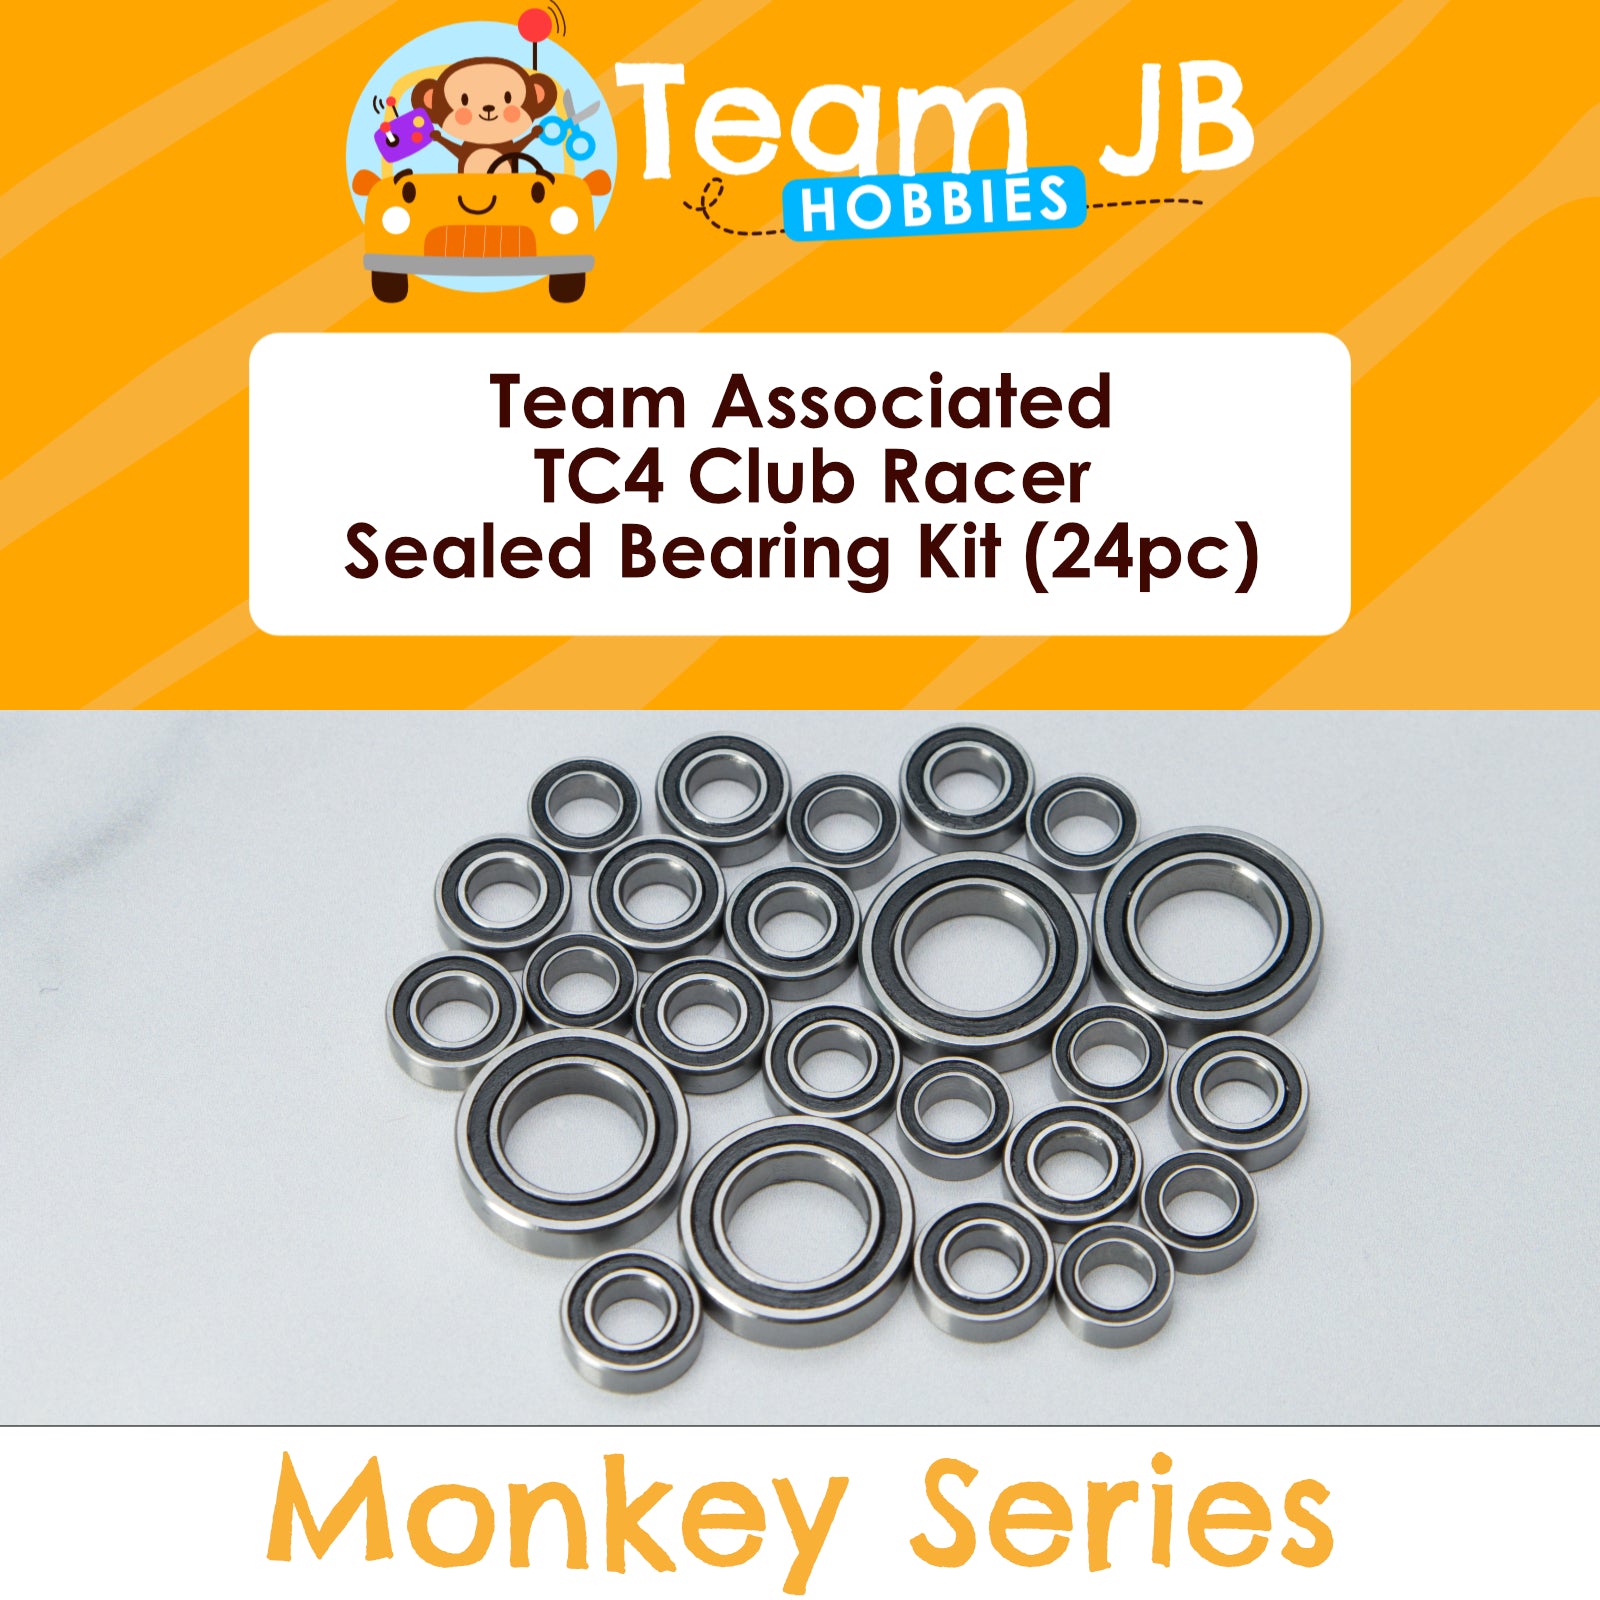 Team Associated TC4 Club Racer - Sealed Bearing Kit